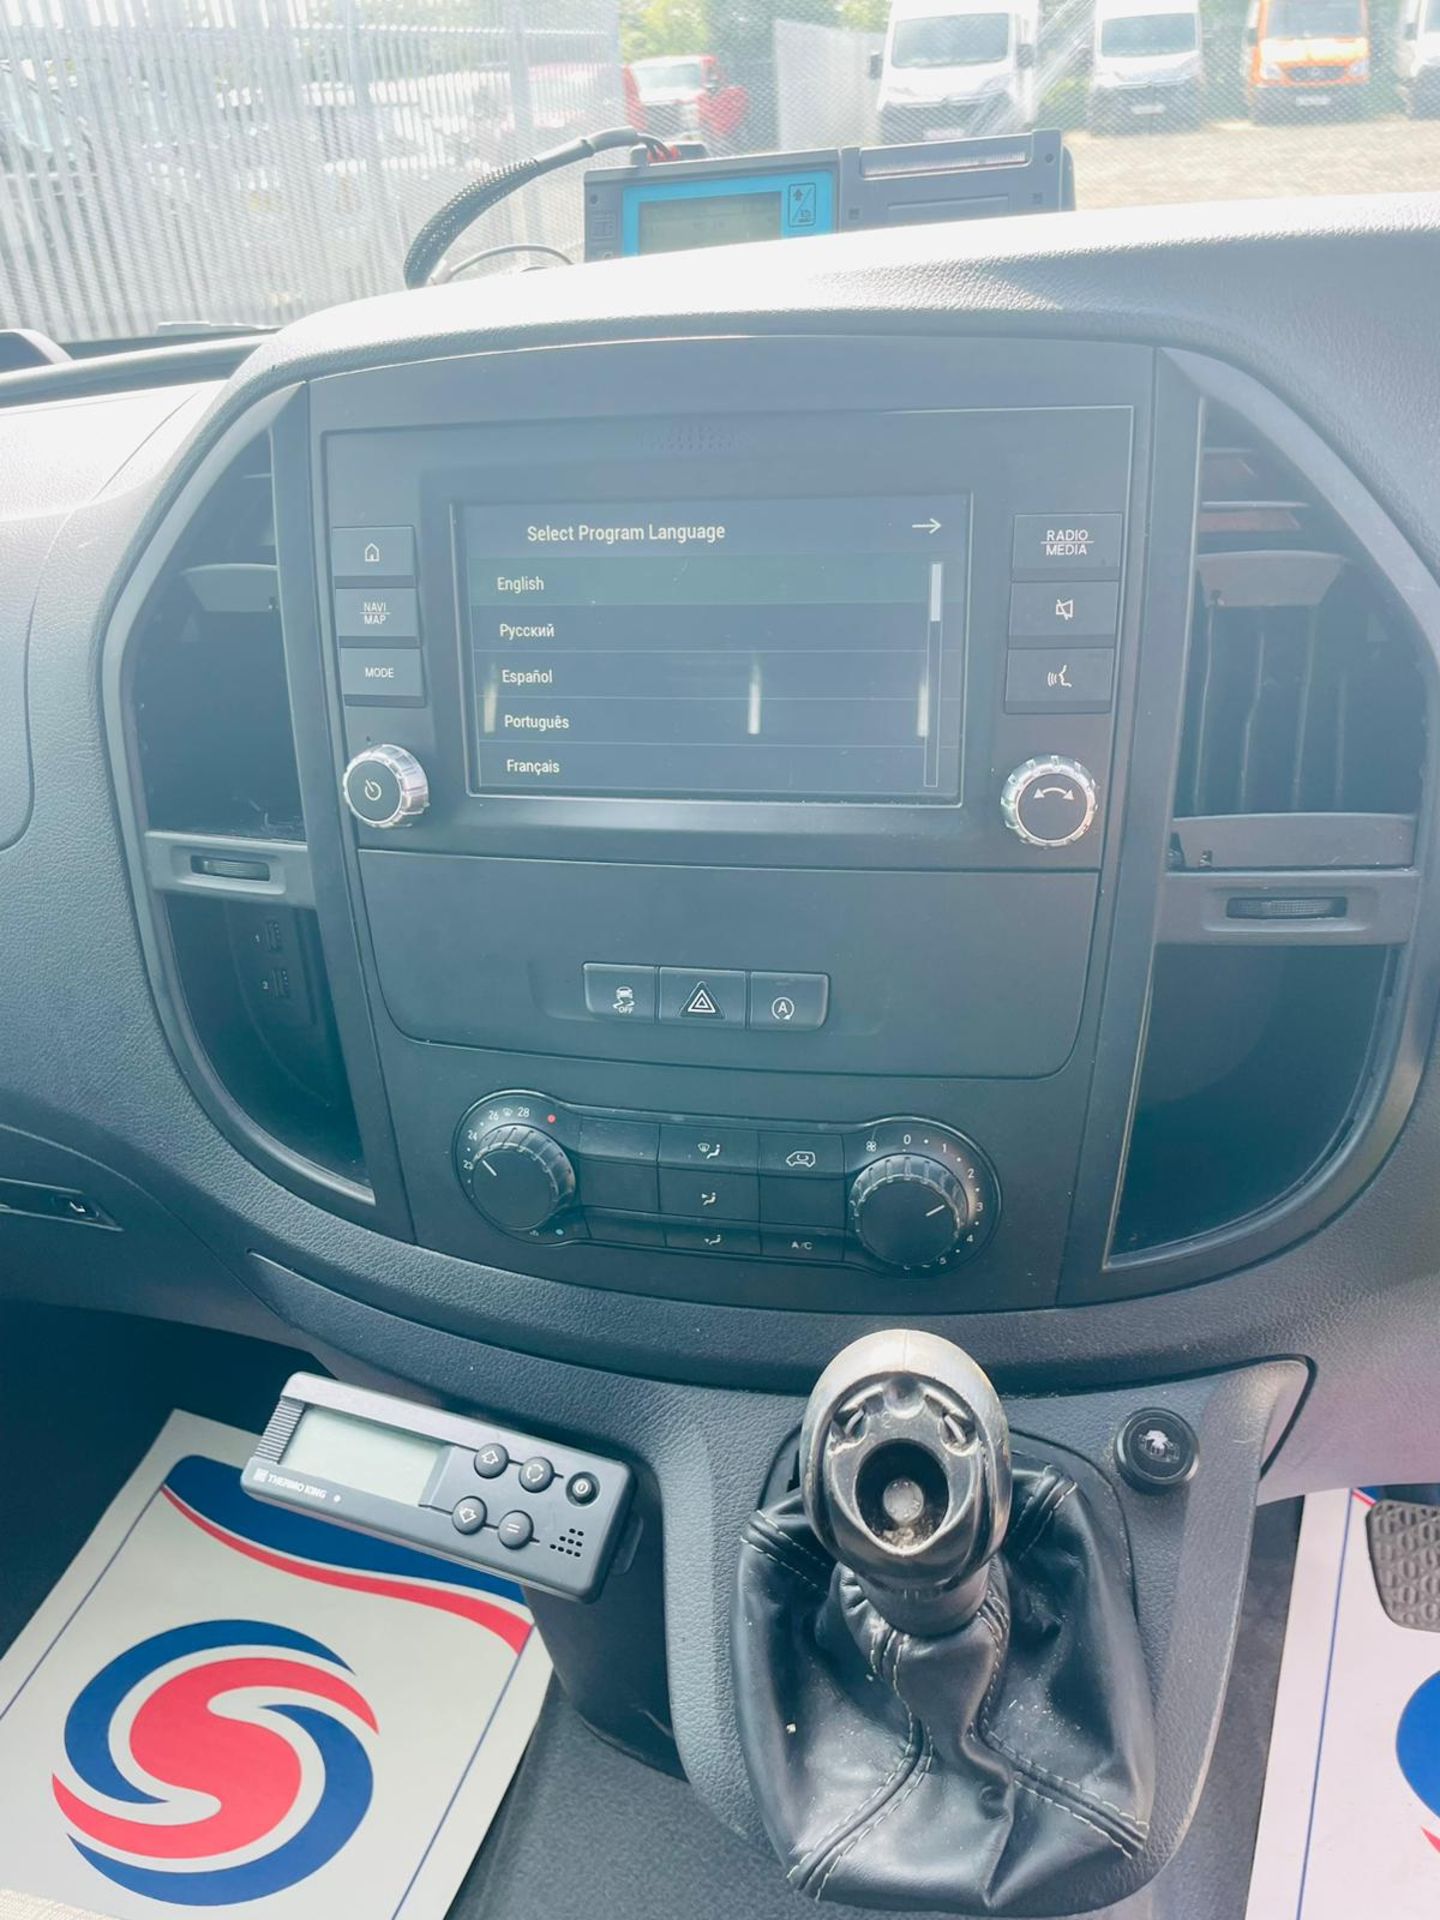 Mercedes Benz Vito 114 CDI RWD Fridge/Freezer 2.1 2019 '69 Reg '-ULEZ Compliant-Parking Sensors-A/C - Image 24 of 31